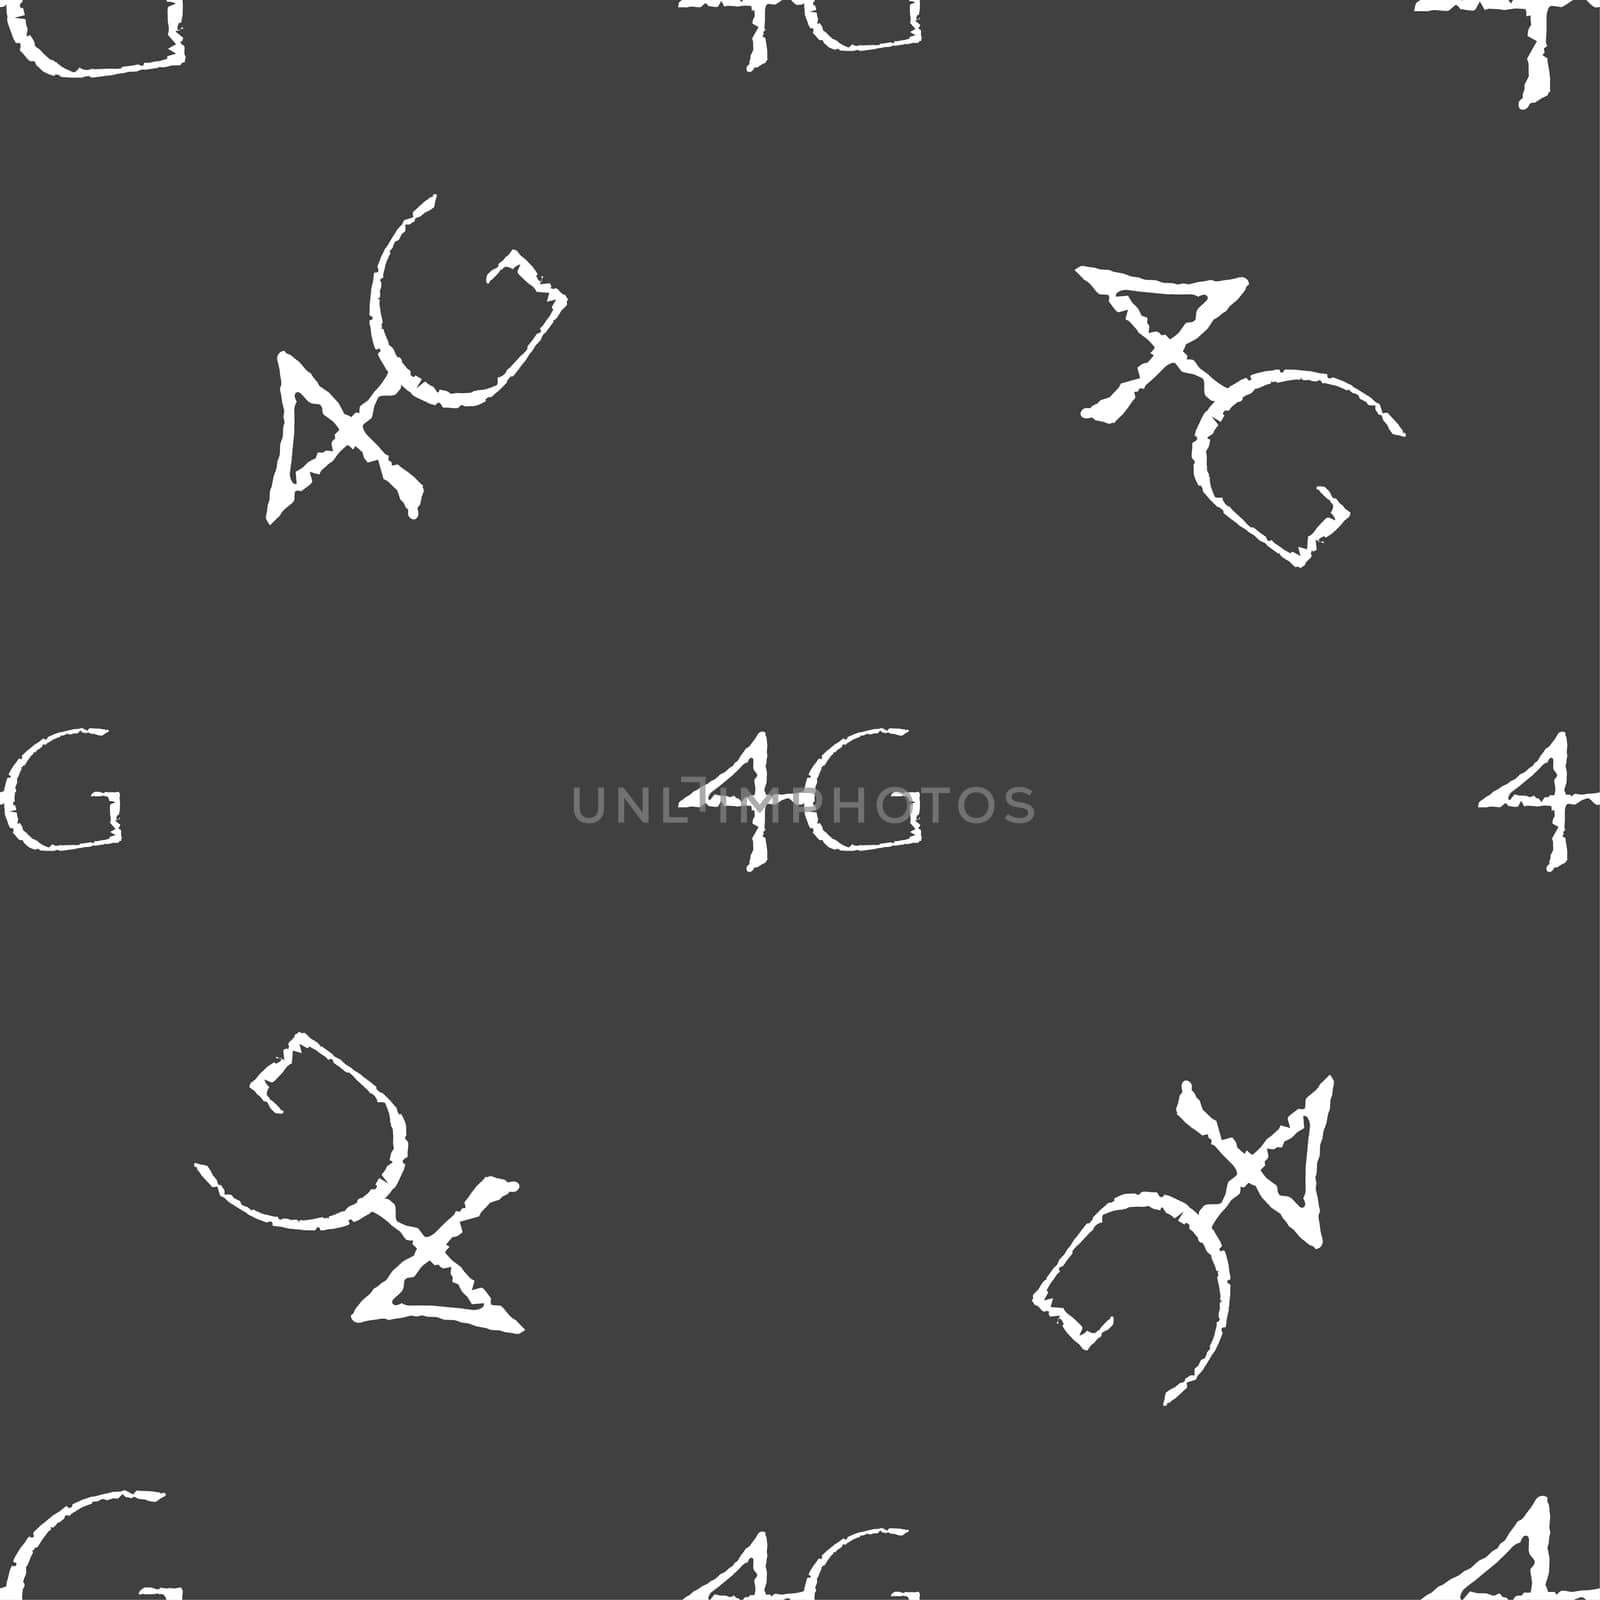 4G sign icon. Mobile telecommunications technology symbol. Seamless pattern on a gray background.  by serhii_lohvyniuk